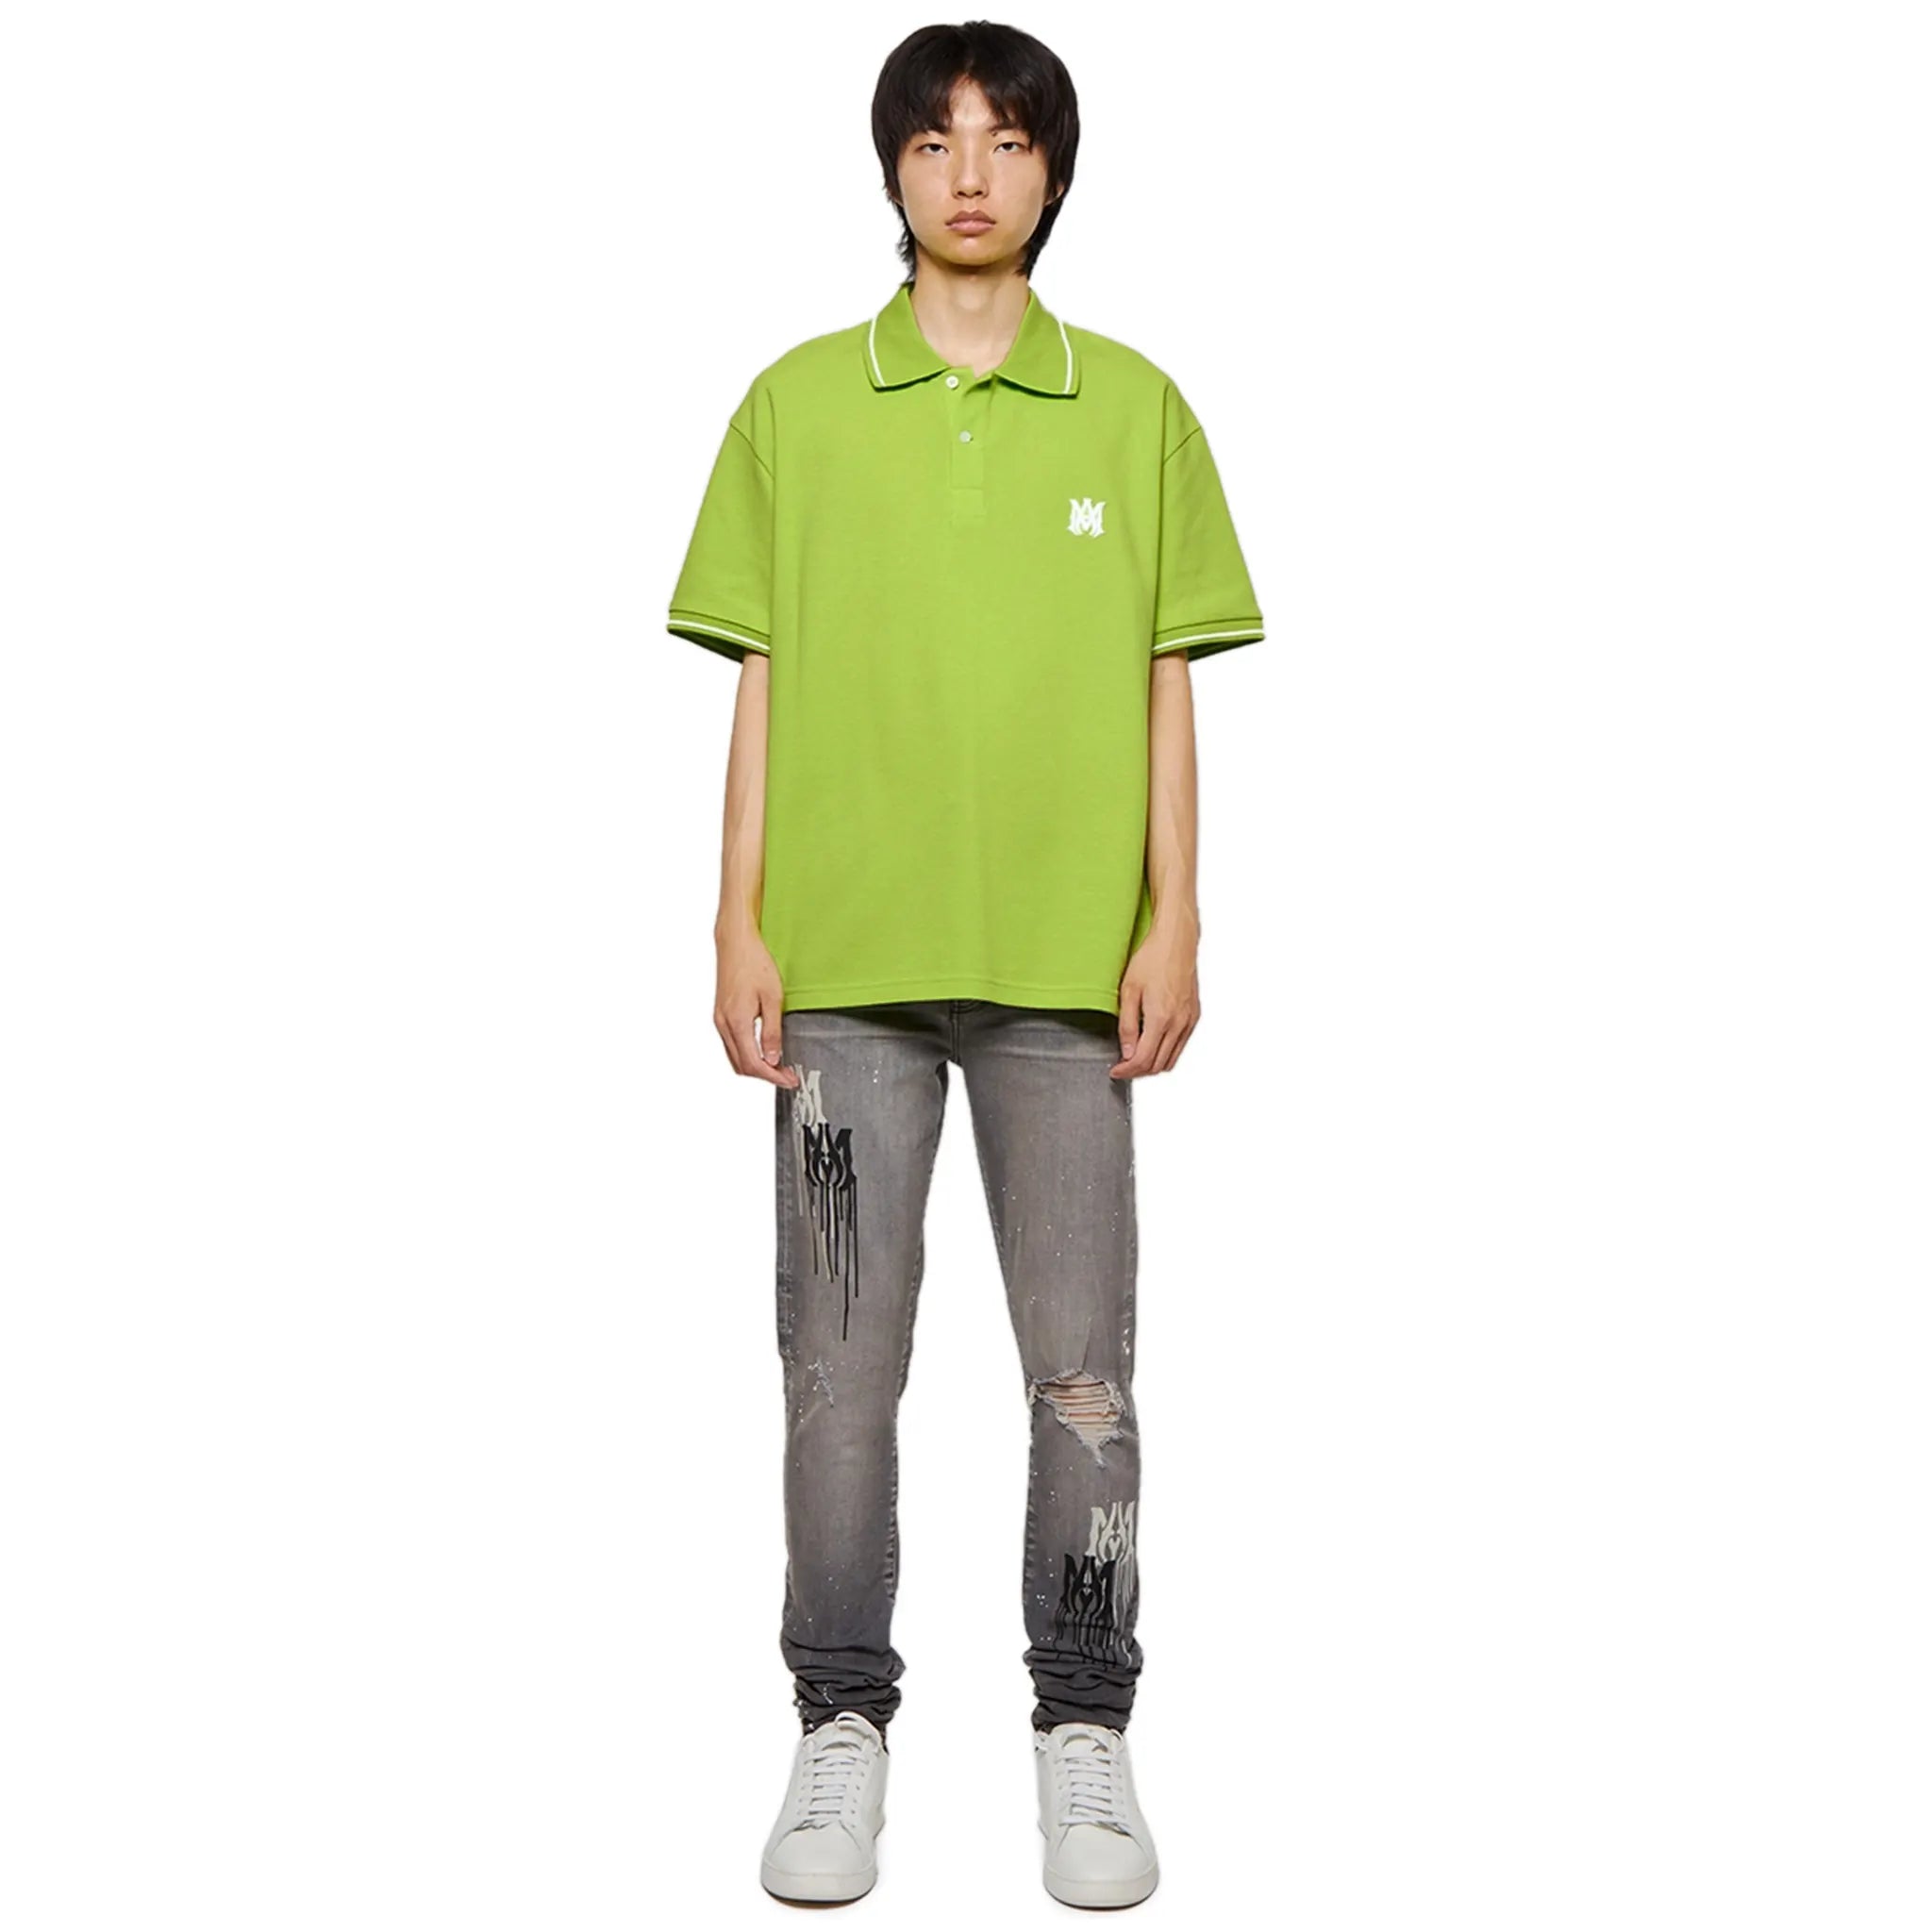 Model view of Amiri Solid Short Sleeve Green Polo Shirt PF22MSS015-360